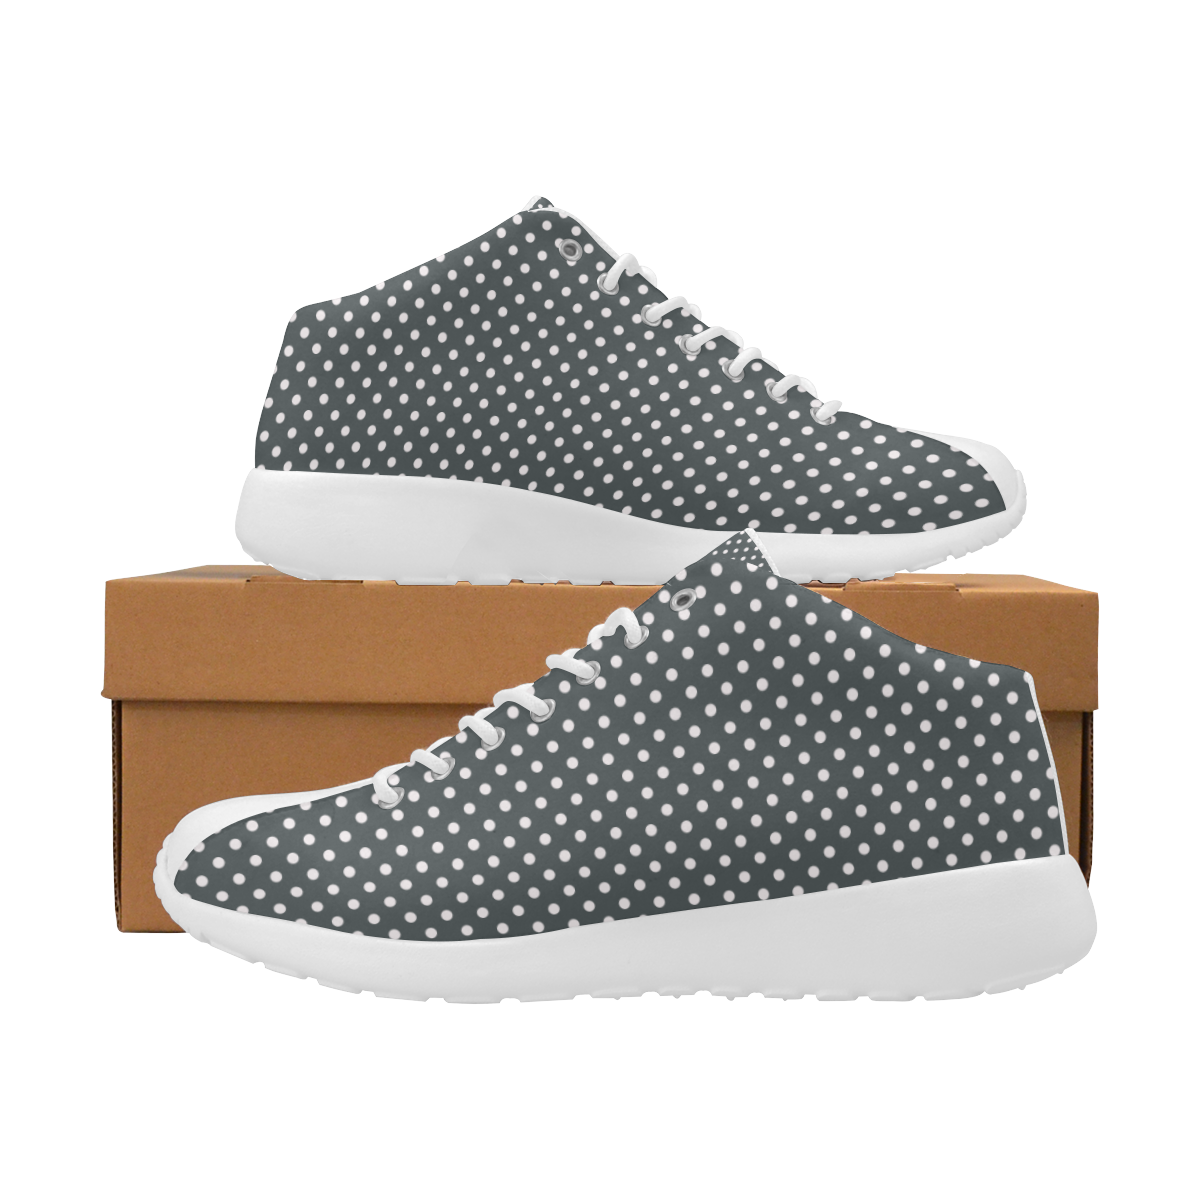 Silver polka dots Women's Basketball Training Shoes (Model 47502)